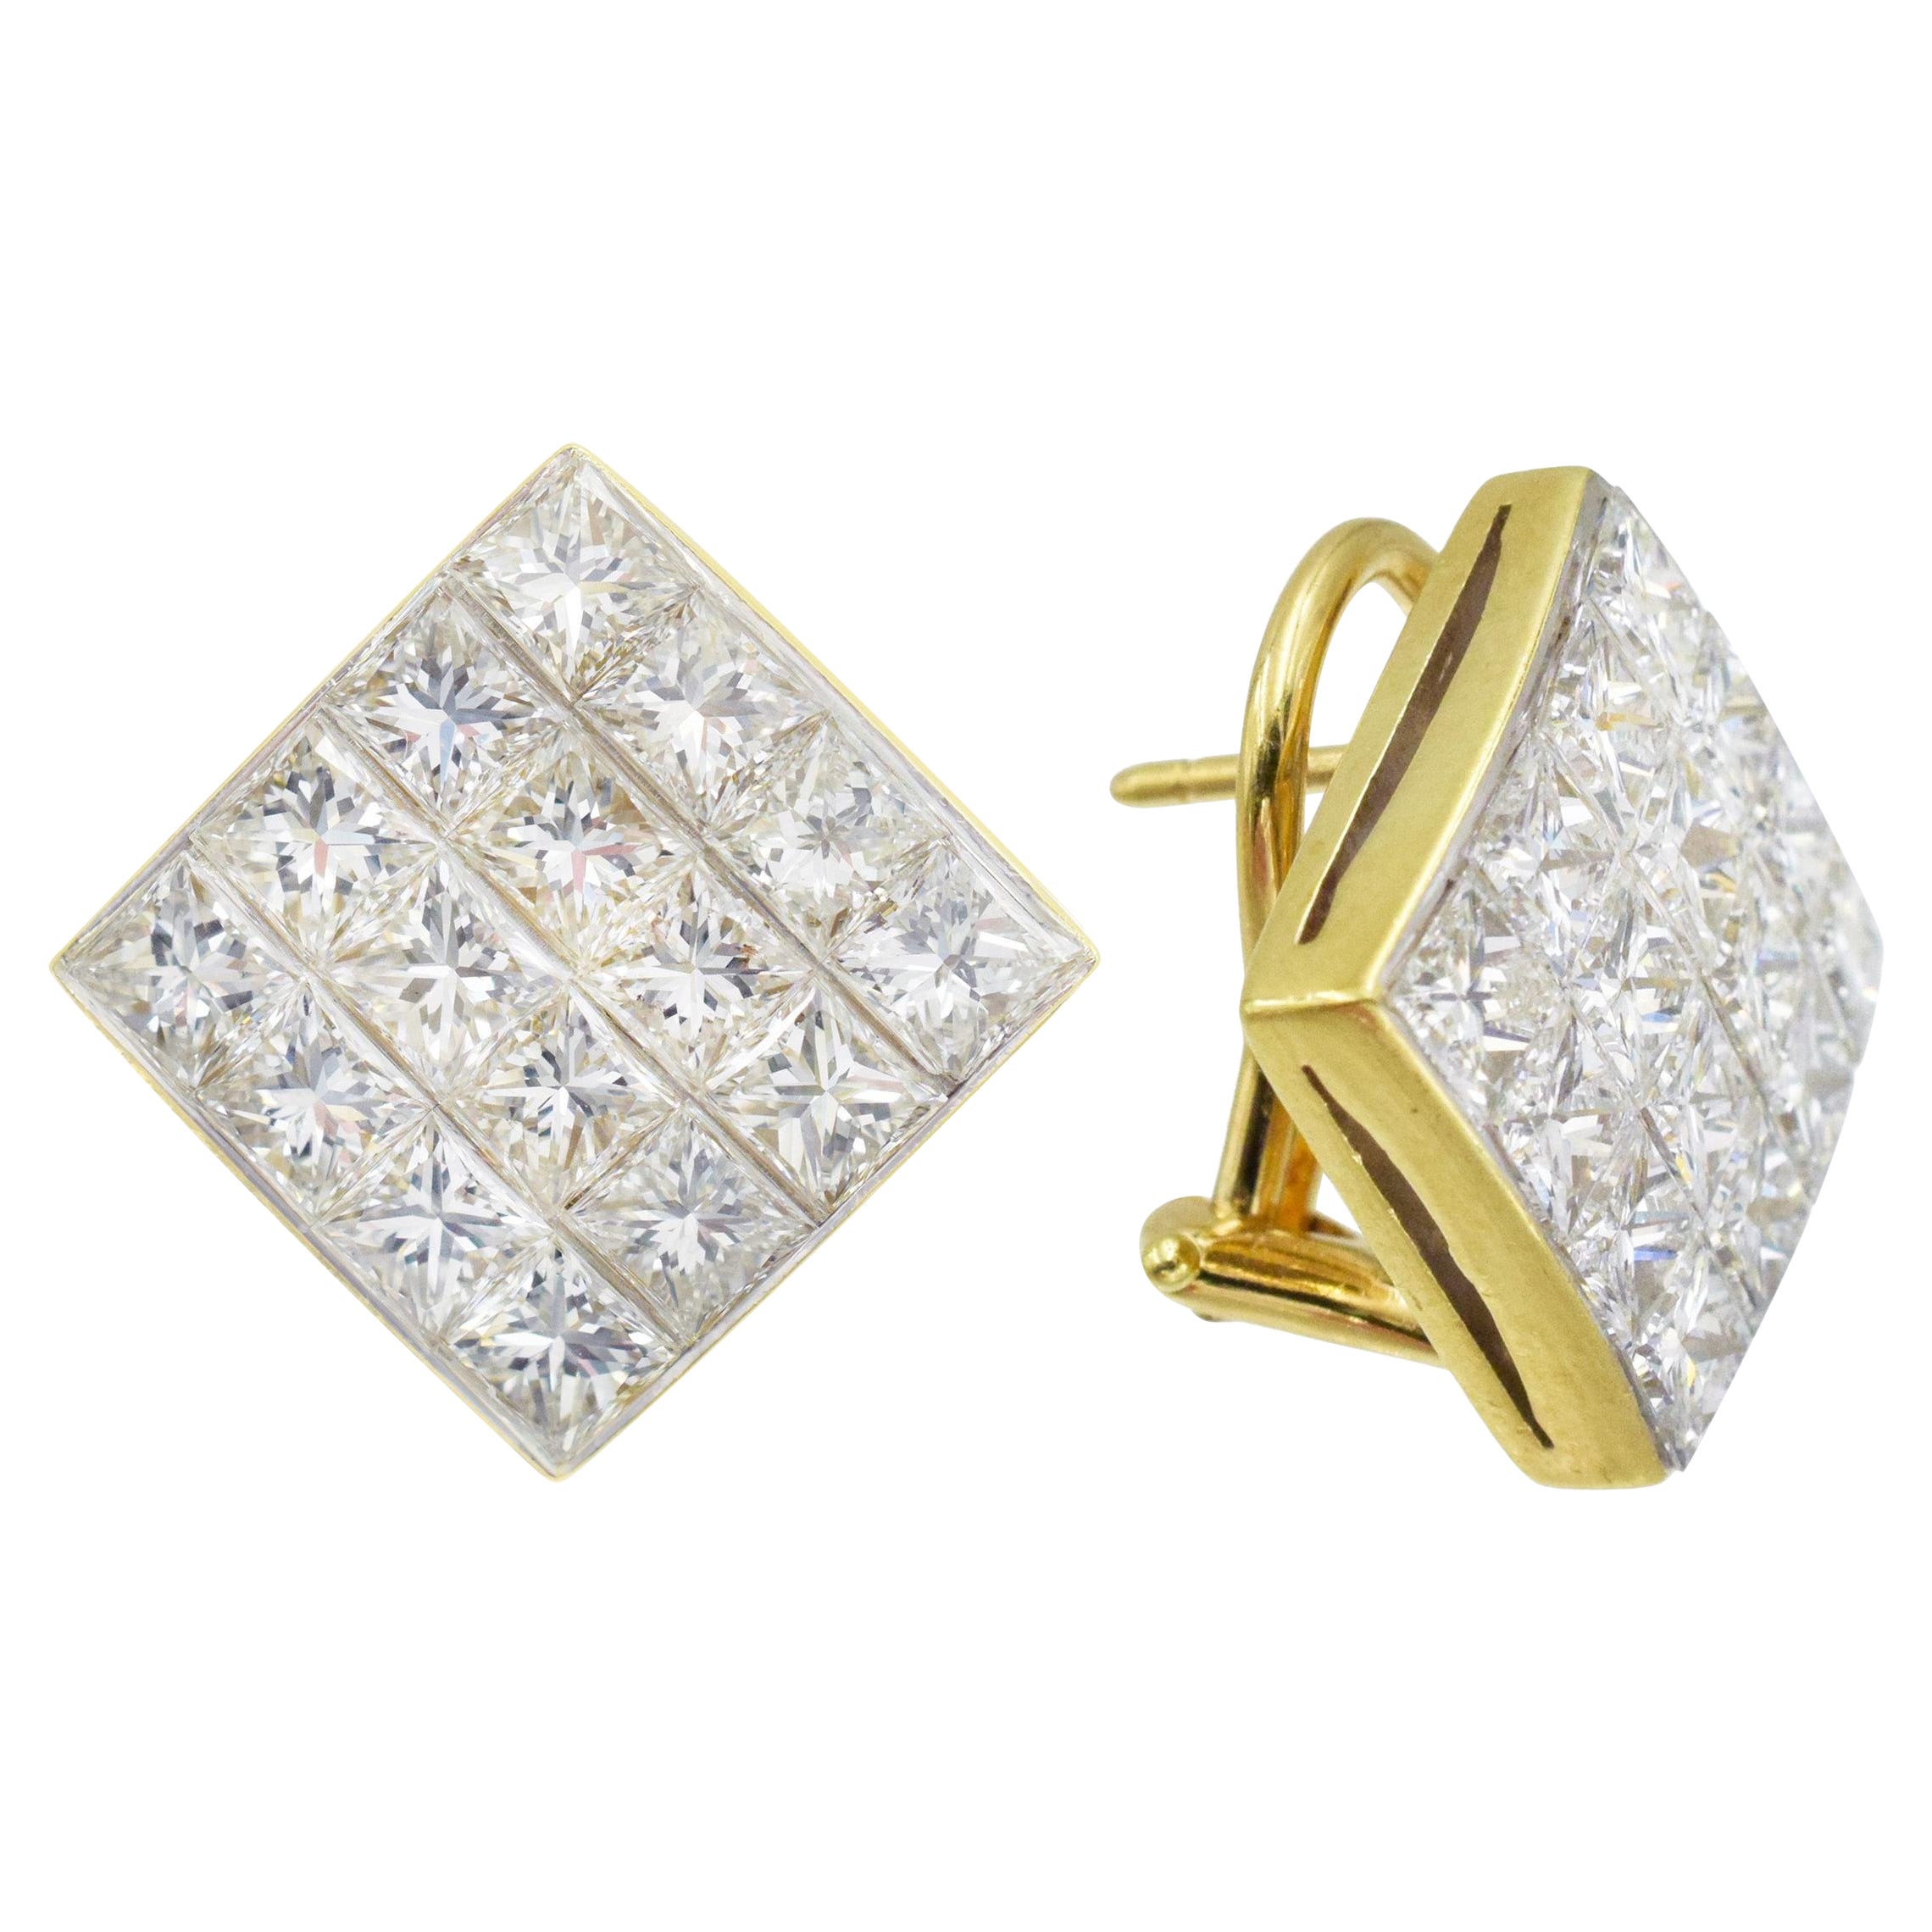 Tiffany & Co. Invisible Set Diamond Earrings